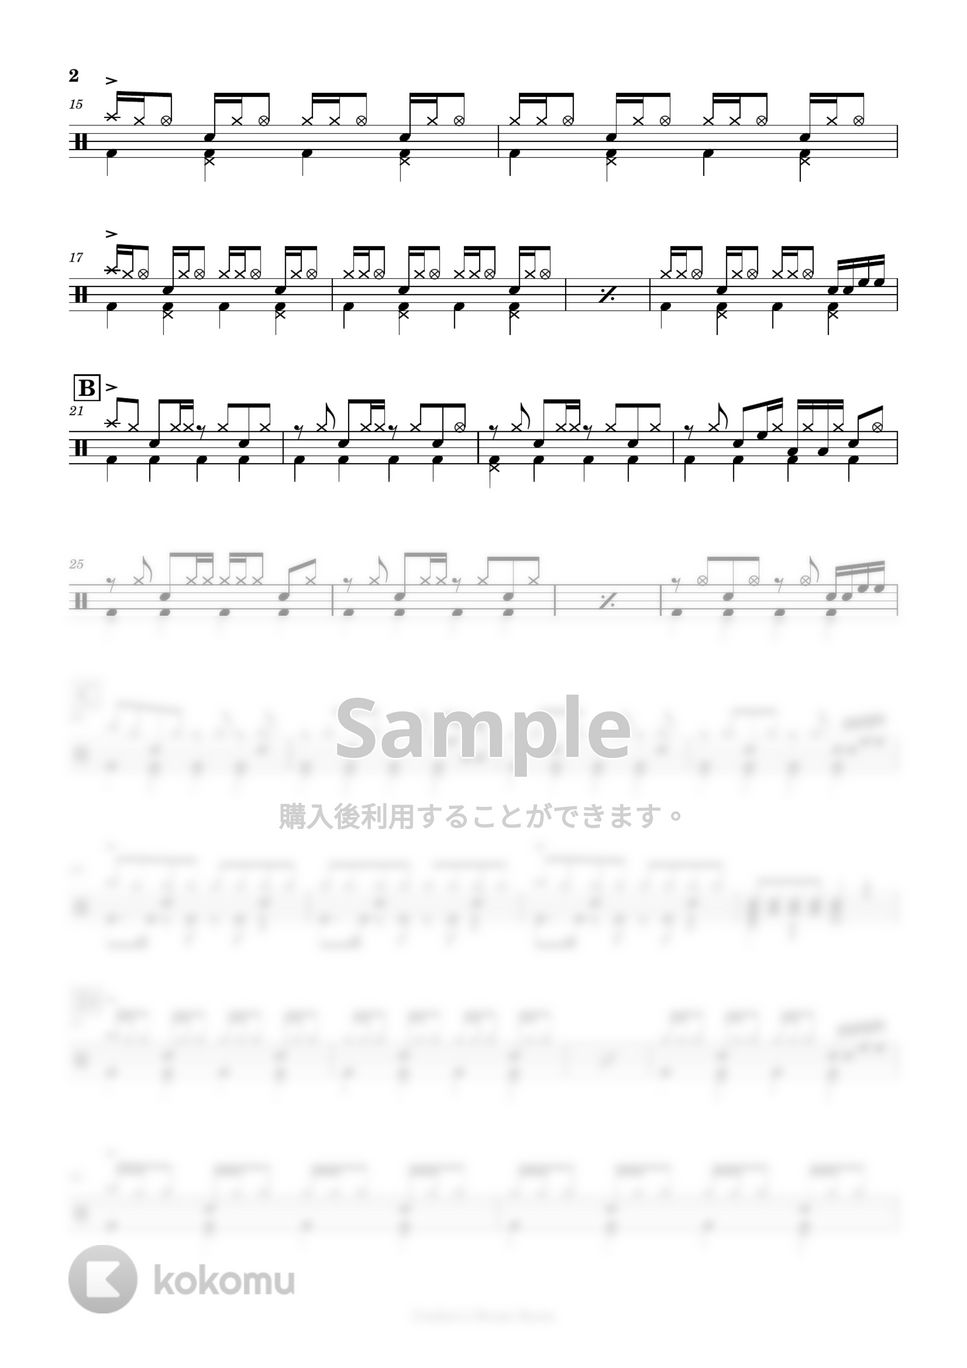 NEE - 不革命前夜 by Cookie's Drum Score